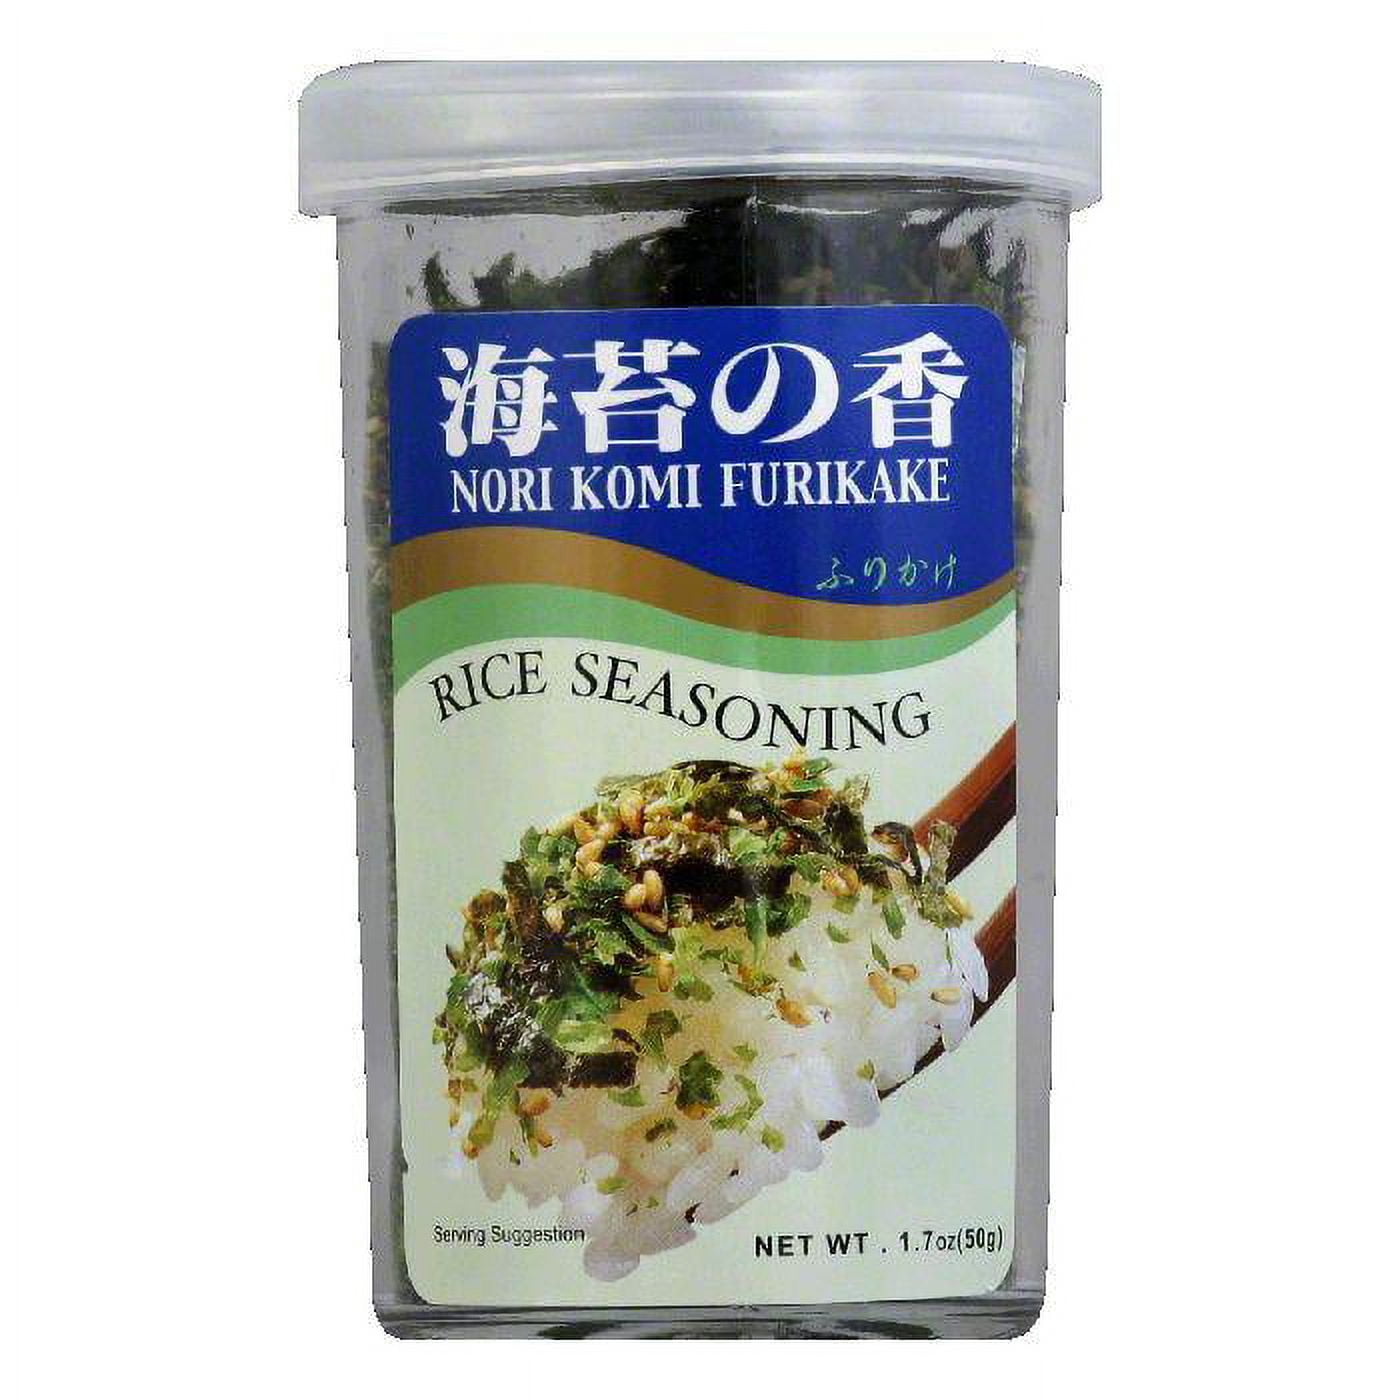 JFC Katsuo Fumi Furikake Rice Seasoning, 1.7-Ounce Jars (Pack of 4)